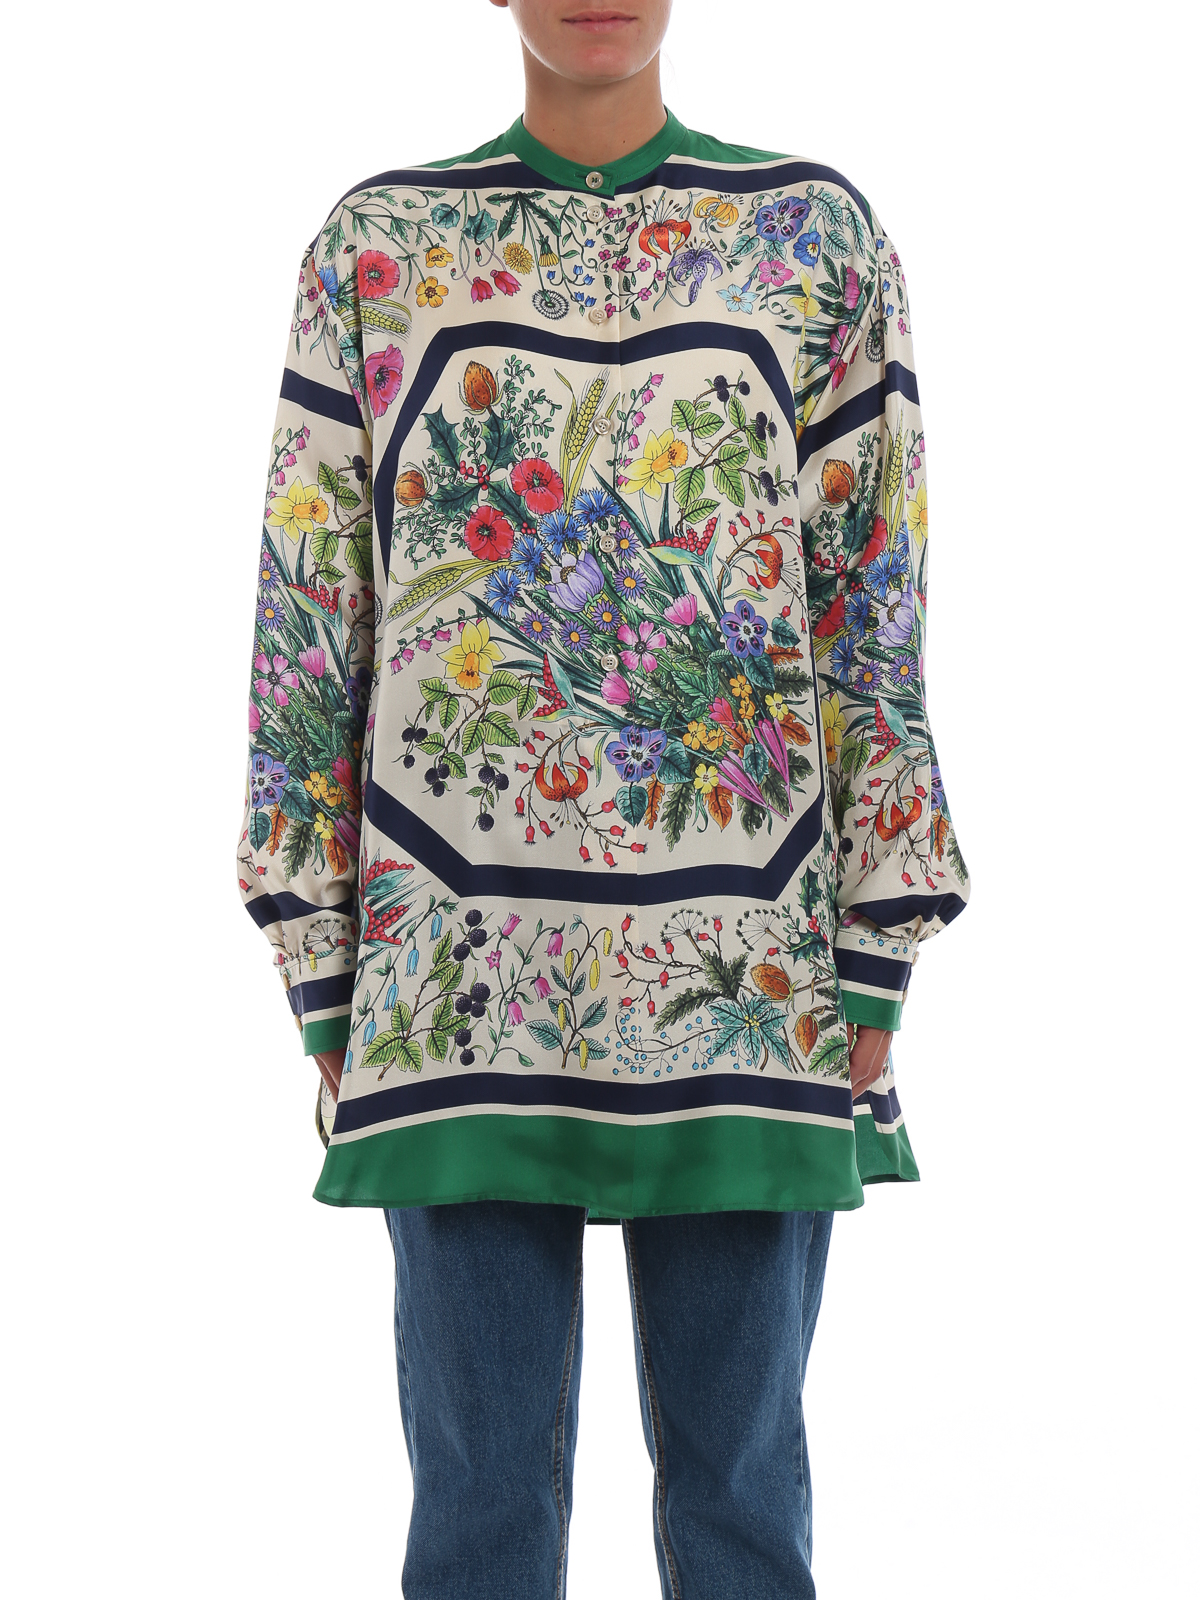 gucci floral print shirt